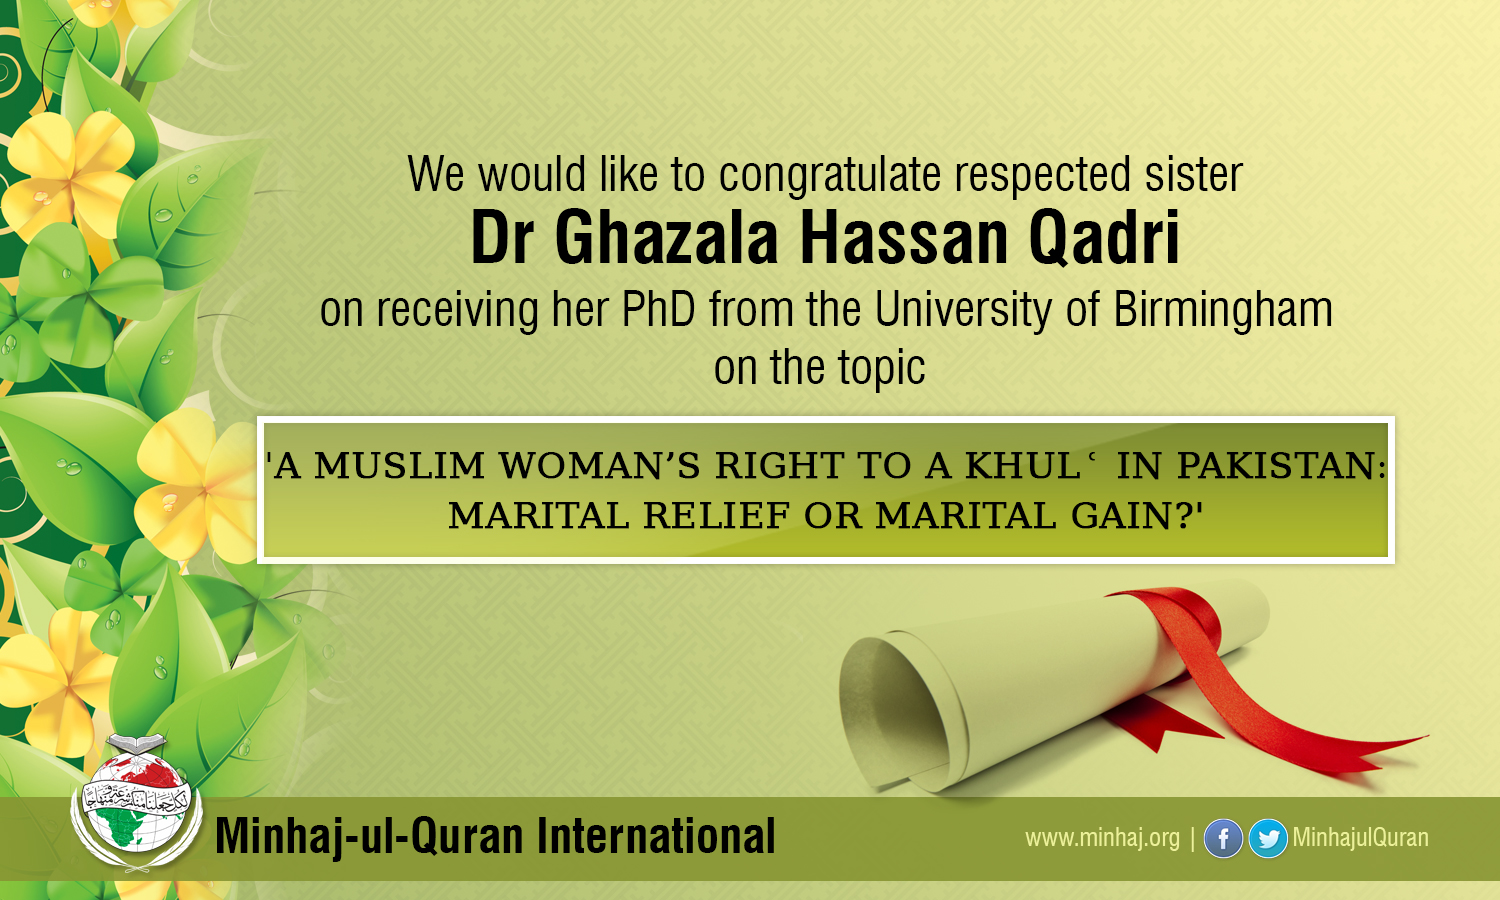 Mrs. Ghazala Hassan Qadri completes her PhD